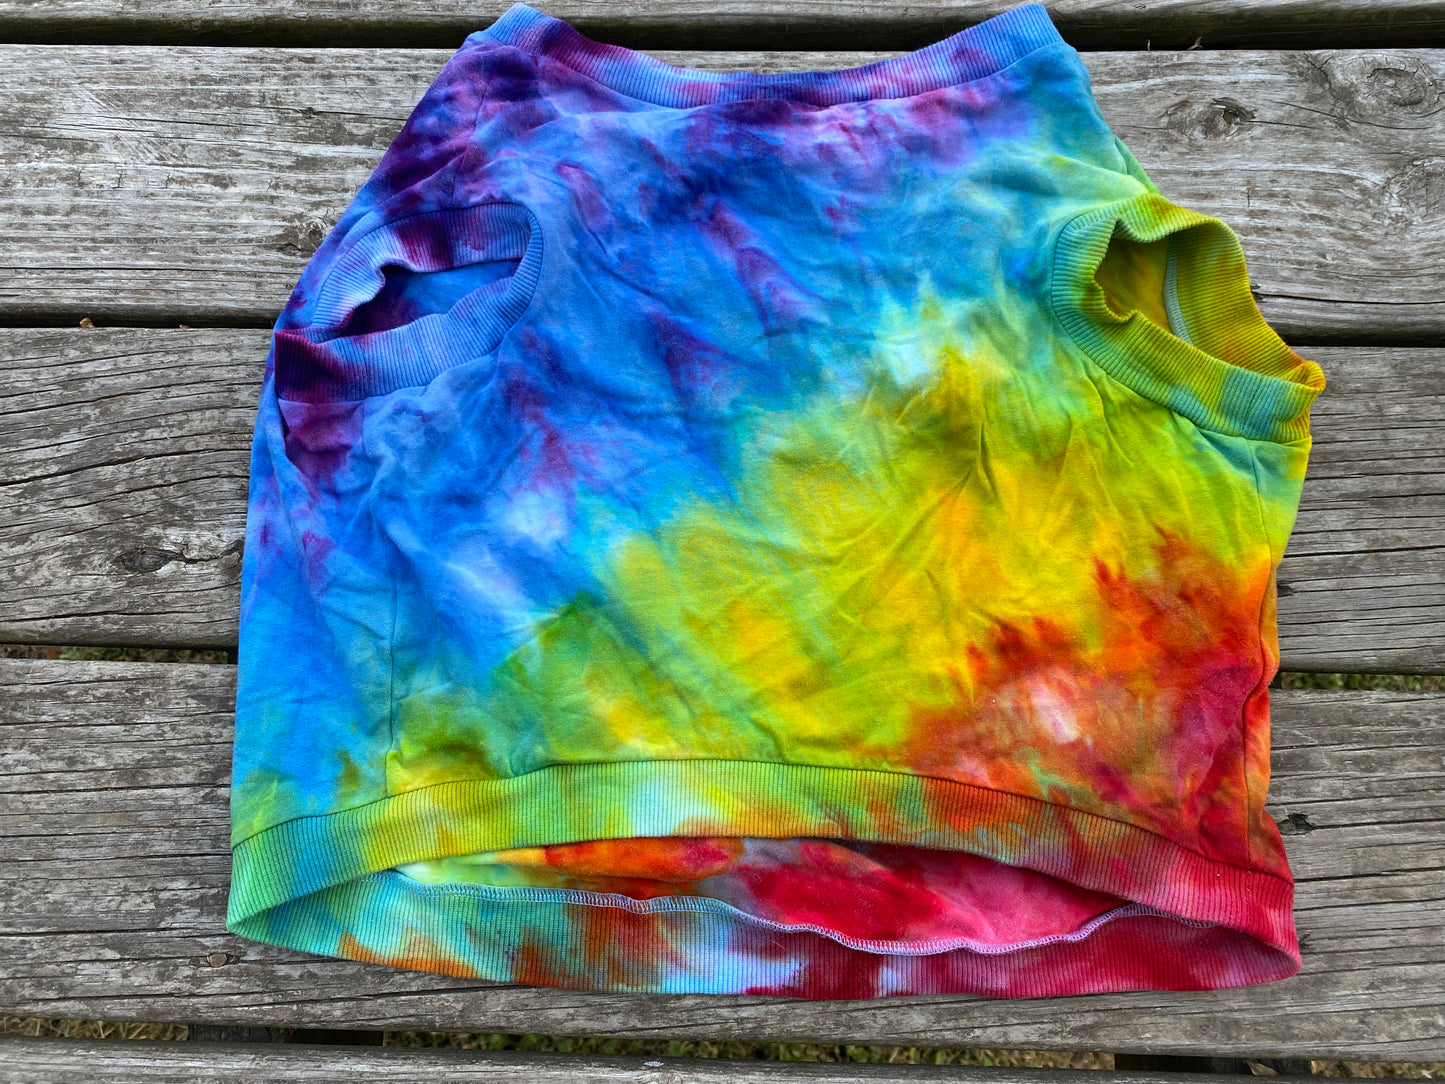 Xl old navy dog shirt rainbow